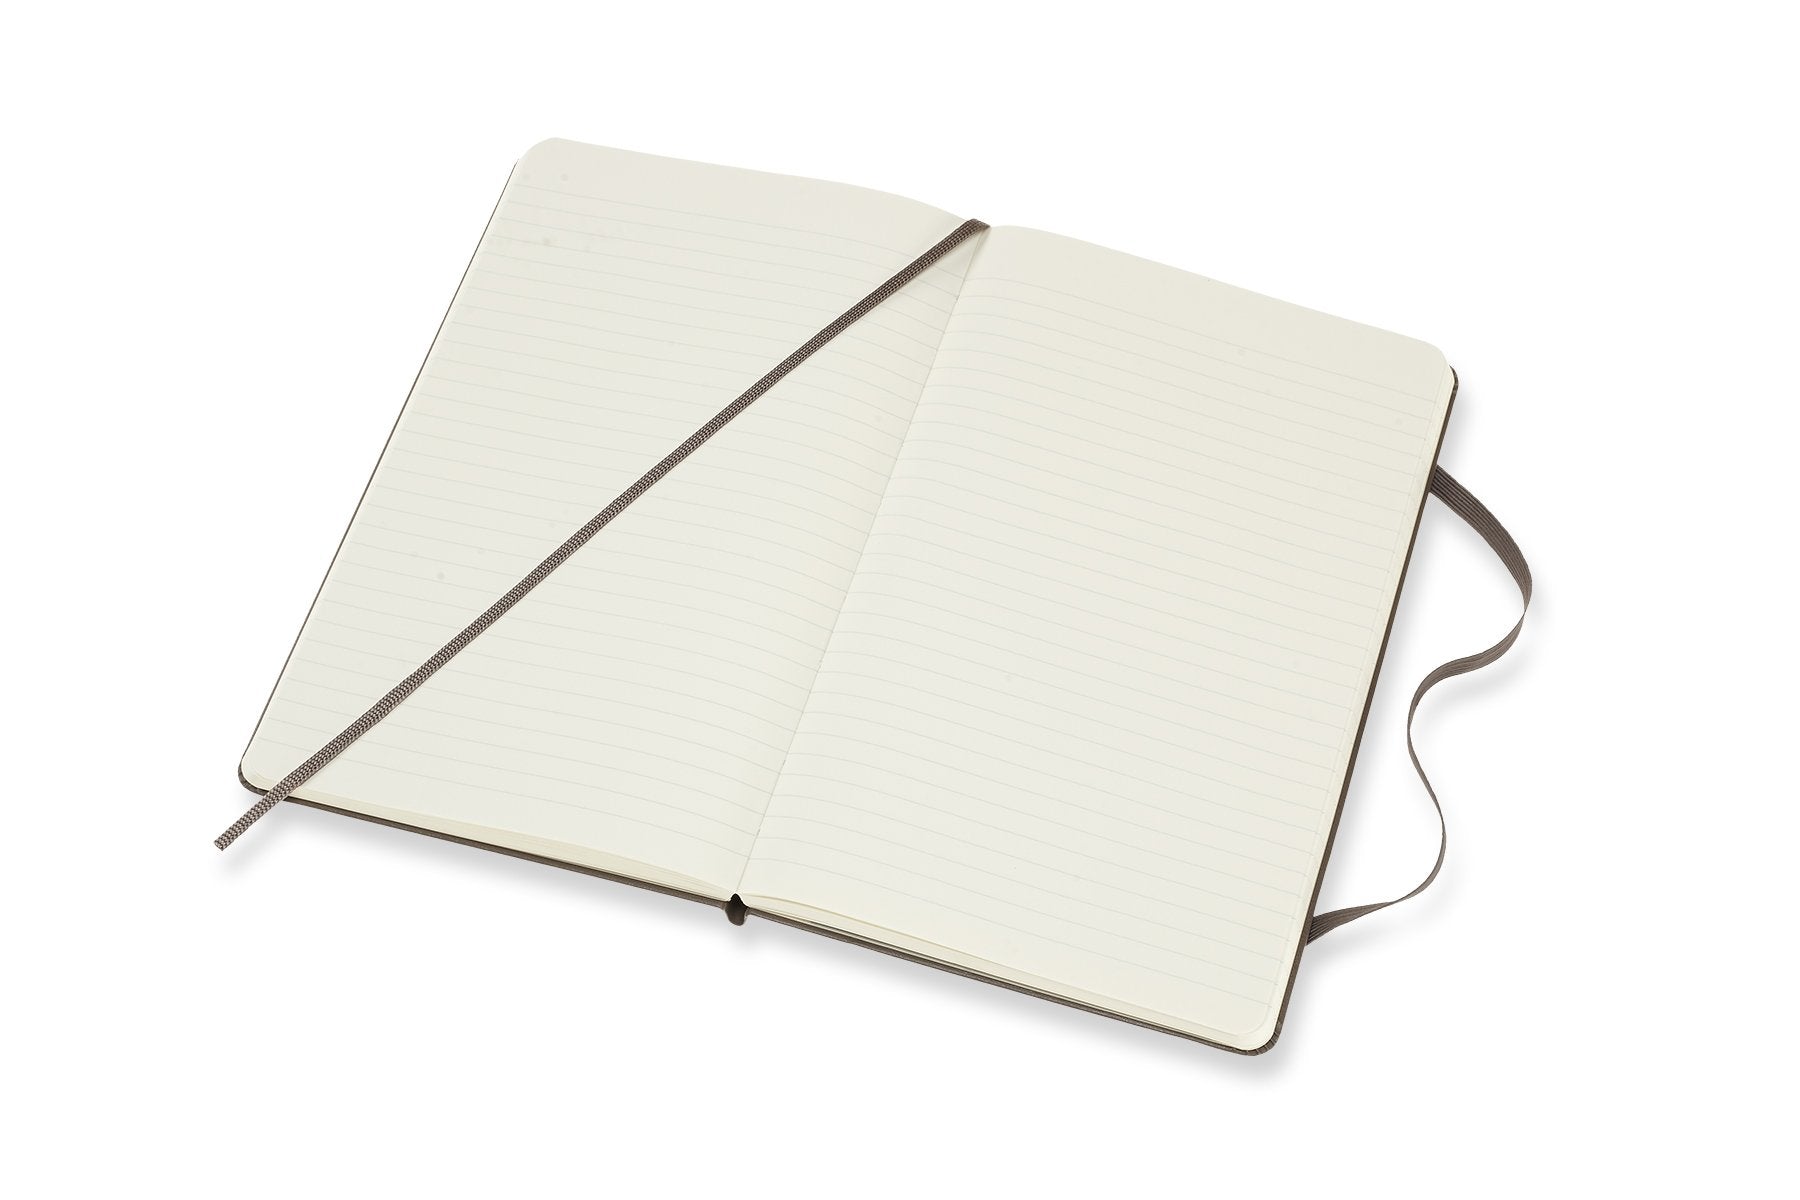 Moleskine Dotted Notebook